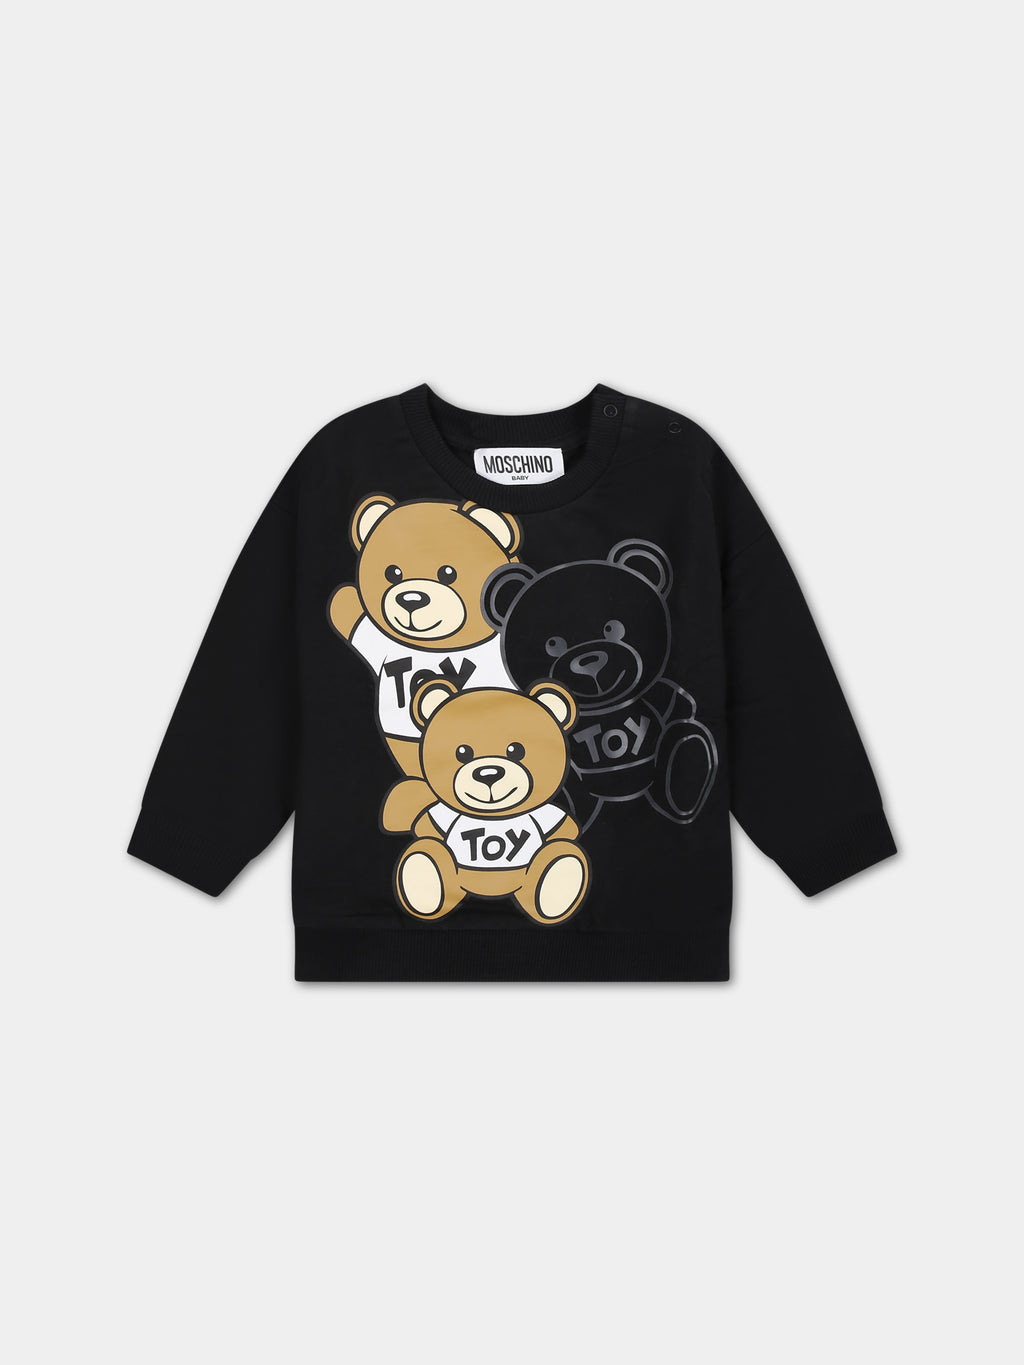 Black sweatshirt for babies with Teddy Bears